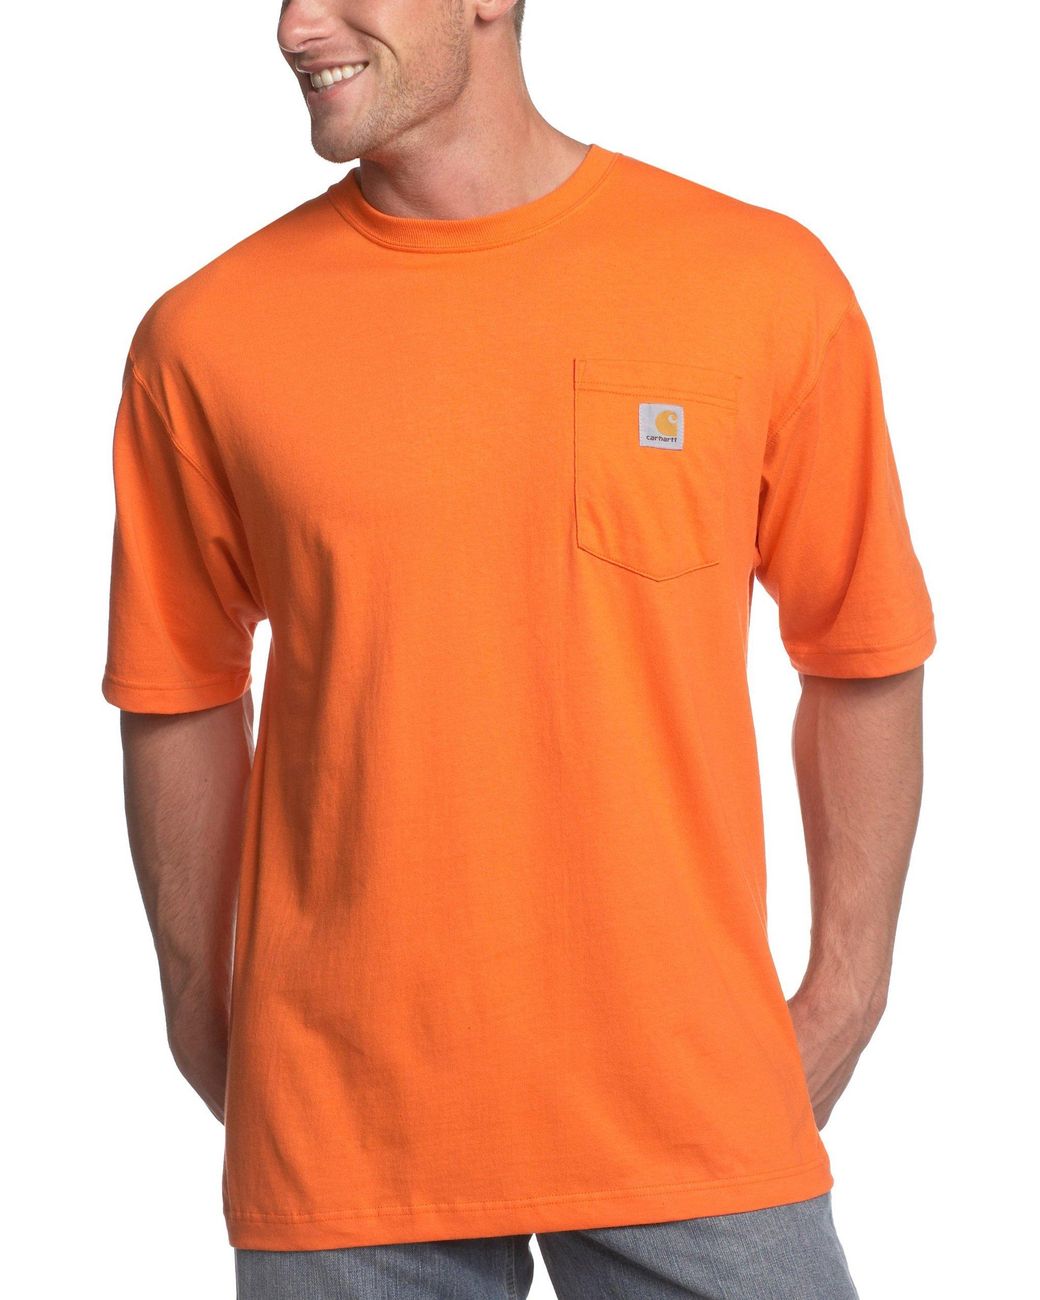 Carhartt K87 Workwear Short Sleeve T-shirt in Orange for Men - Save 16% ...